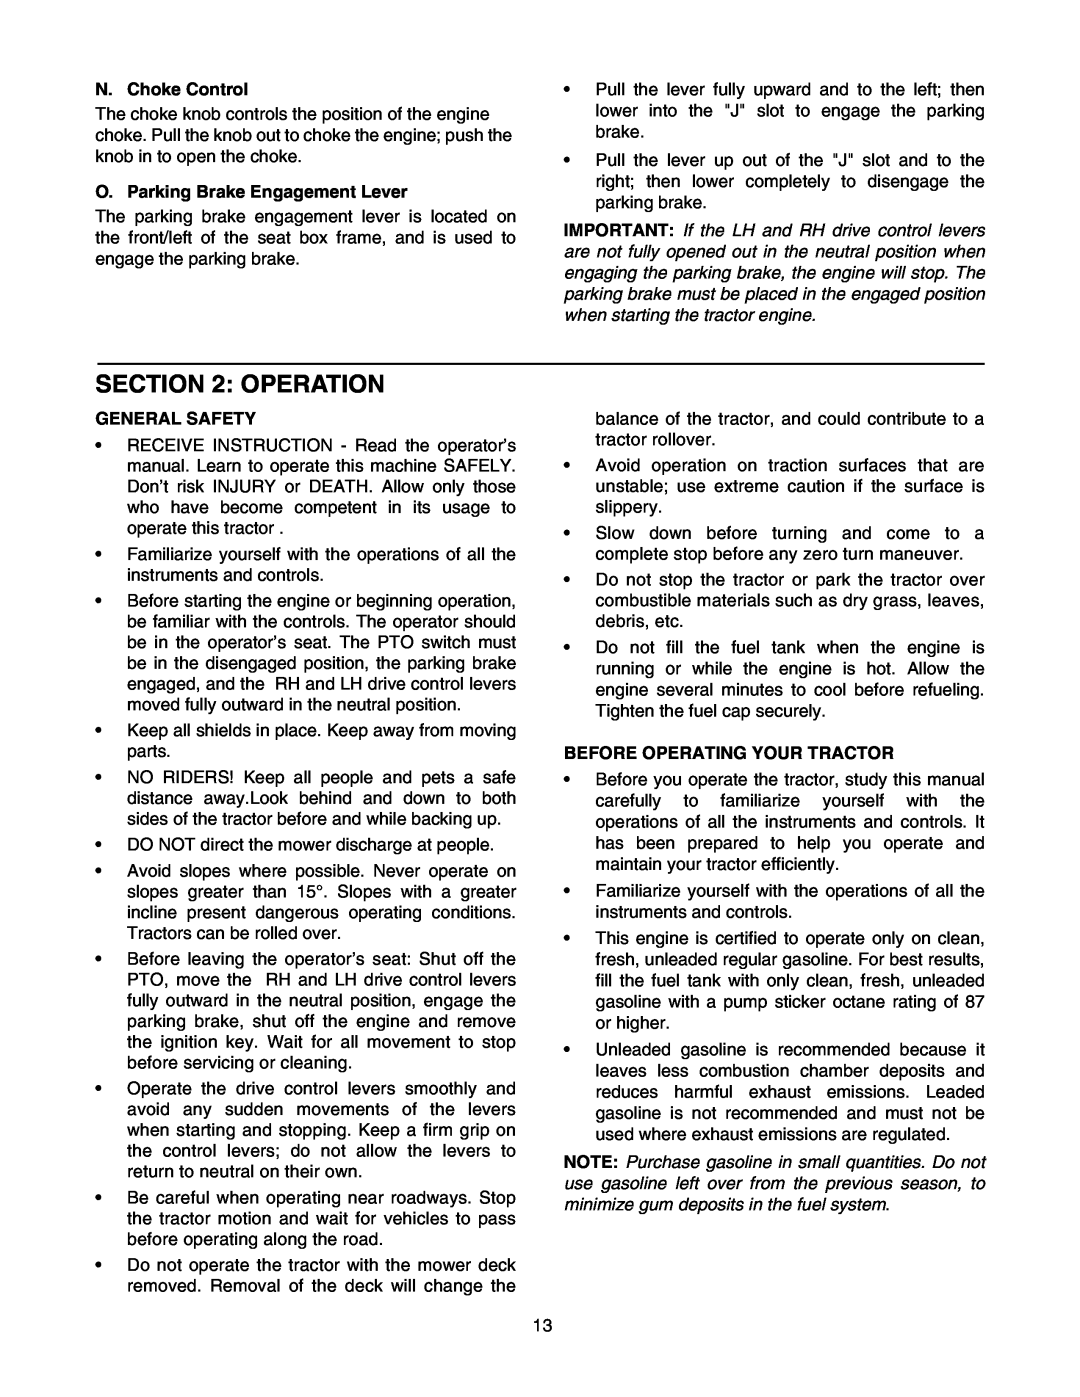 Cub Cadet RZT 50 manual Operation, N. Choke Control, O. Parking Brake Engagement Lever, General Safety 